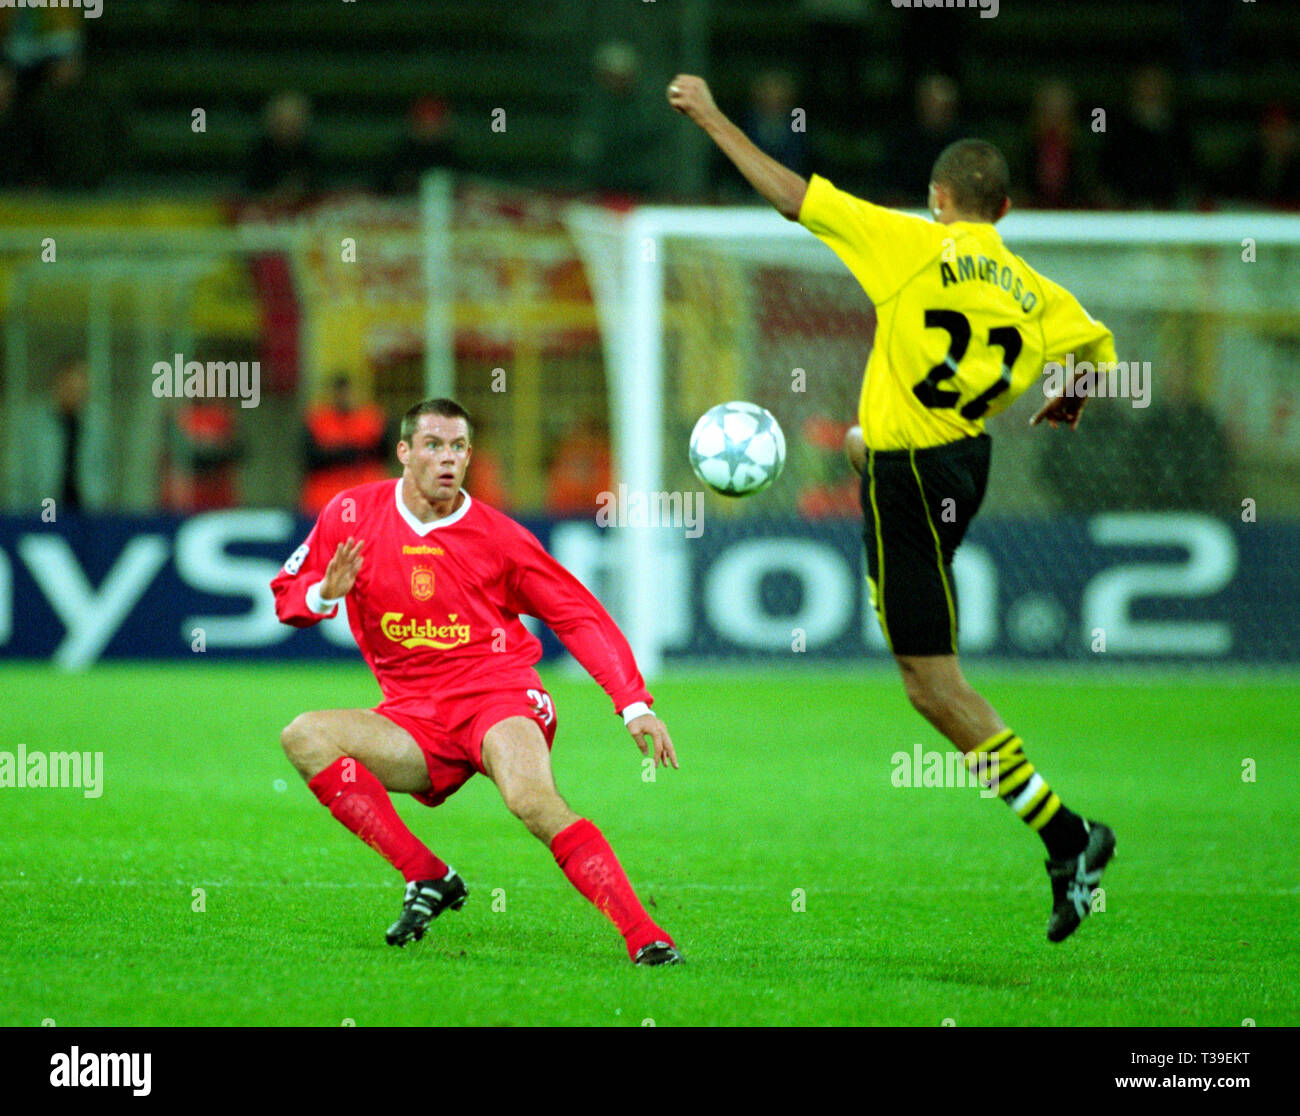 Westfalenstadion Dortmund Germany, 19.9. 2001 Football UEFA Champions  League Season 2001/02 matchday 2, Borussia Dortmund (BVB, yellow) vs  Liverpool FC (LIV, red) 0:0 --- Jamie CARRAGHER (LIV) , Marcio AMOROSO (BVB  Stock Photo - Alamy